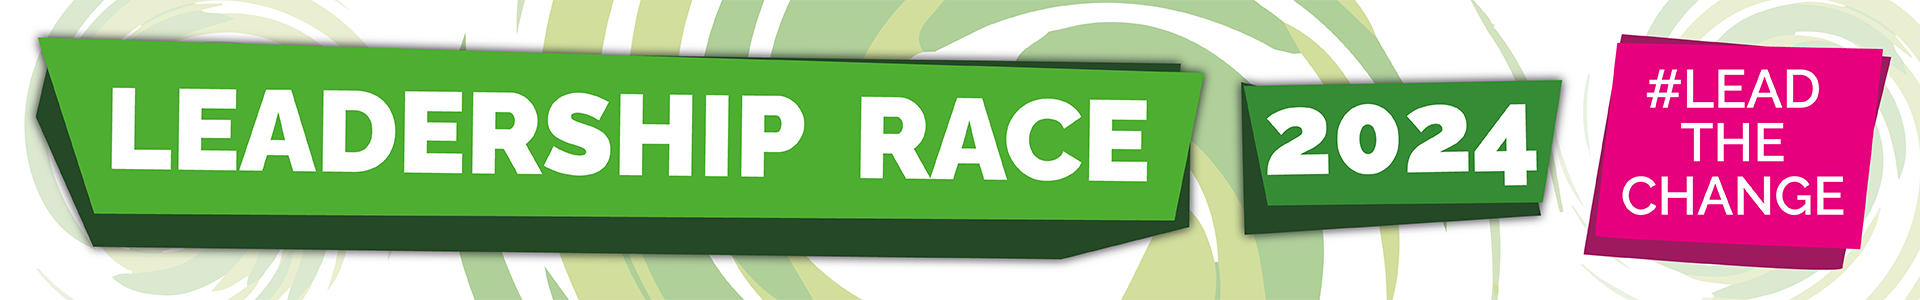 leadership race logo